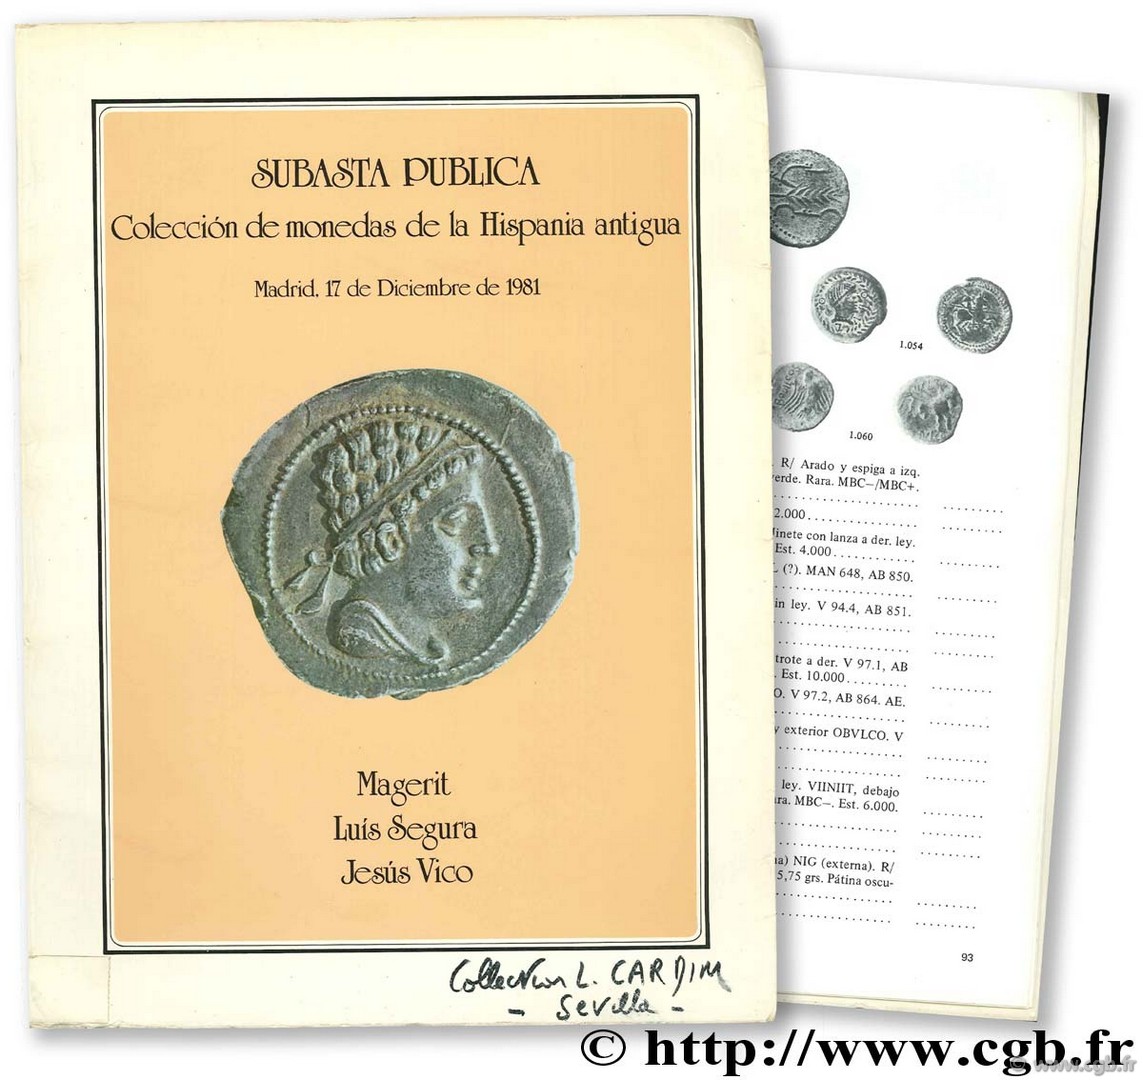 Coleccion de monedas de la Hispania antigua (L. Cardim Sevilla) Madrid, 17 de diciembre 1981 MAGERIT L., SEGURA L., VICO J.